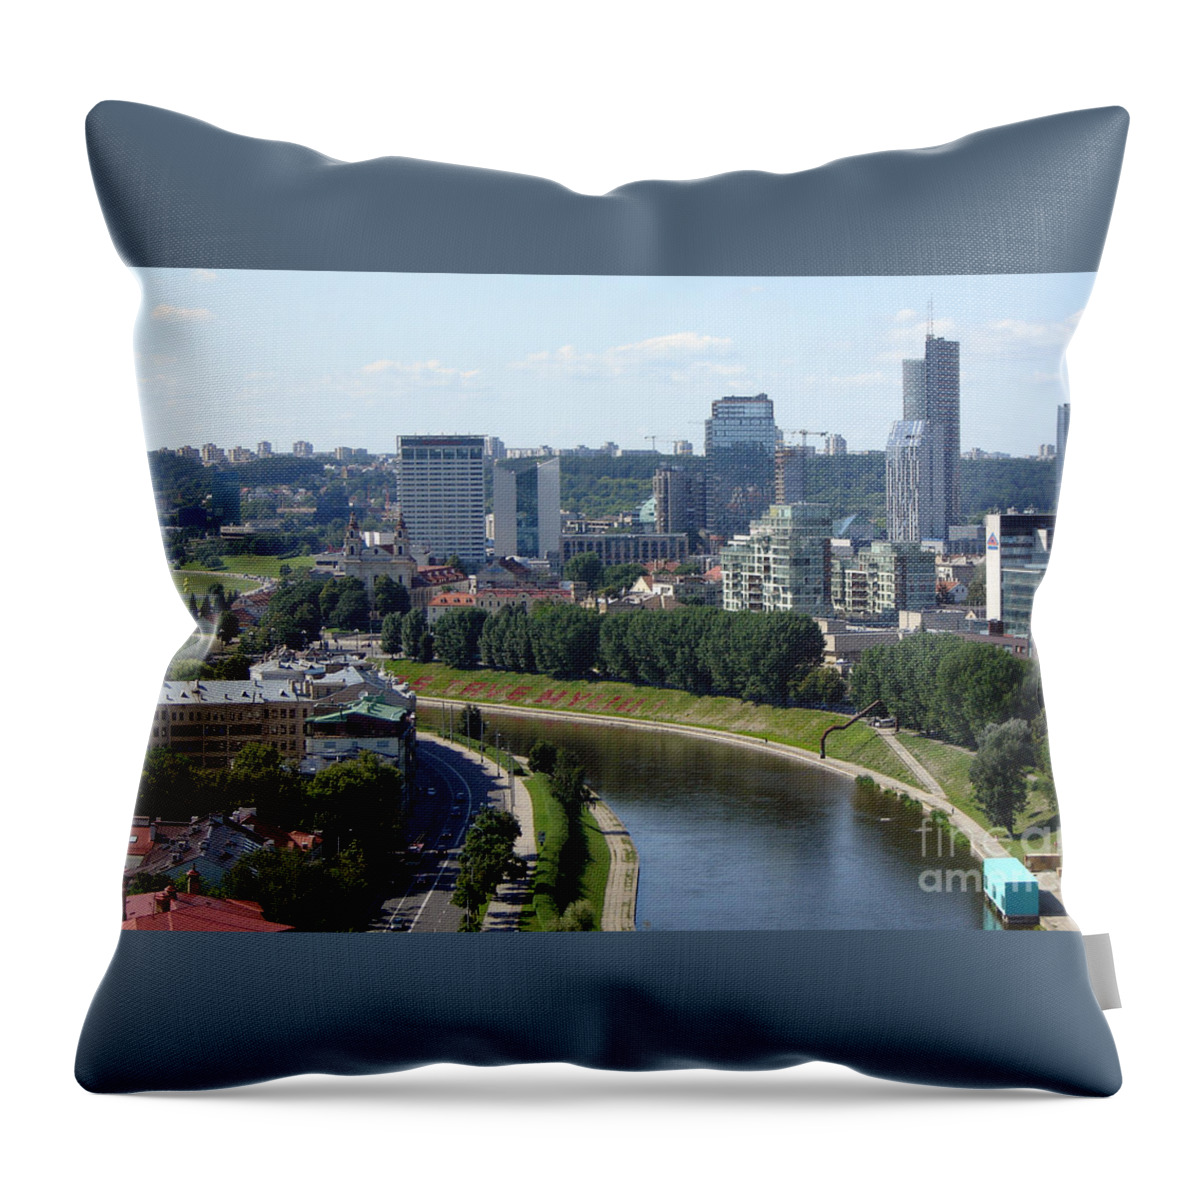 Vilnius Throw Pillow featuring the photograph I Love You. Vilnius. Lithuania by Ausra Huntington nee Paulauskaite